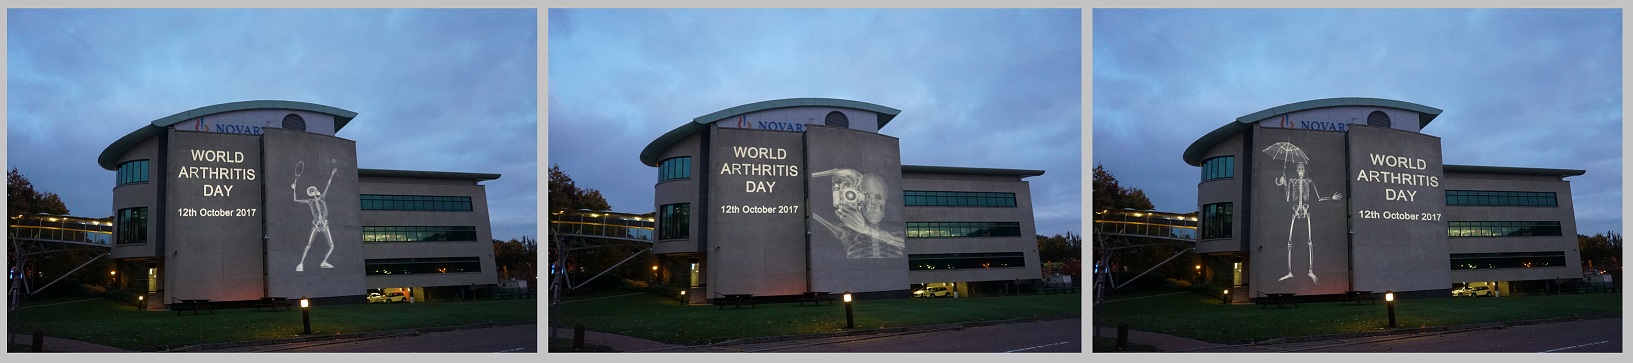 Novartis projection - World Arthritis day